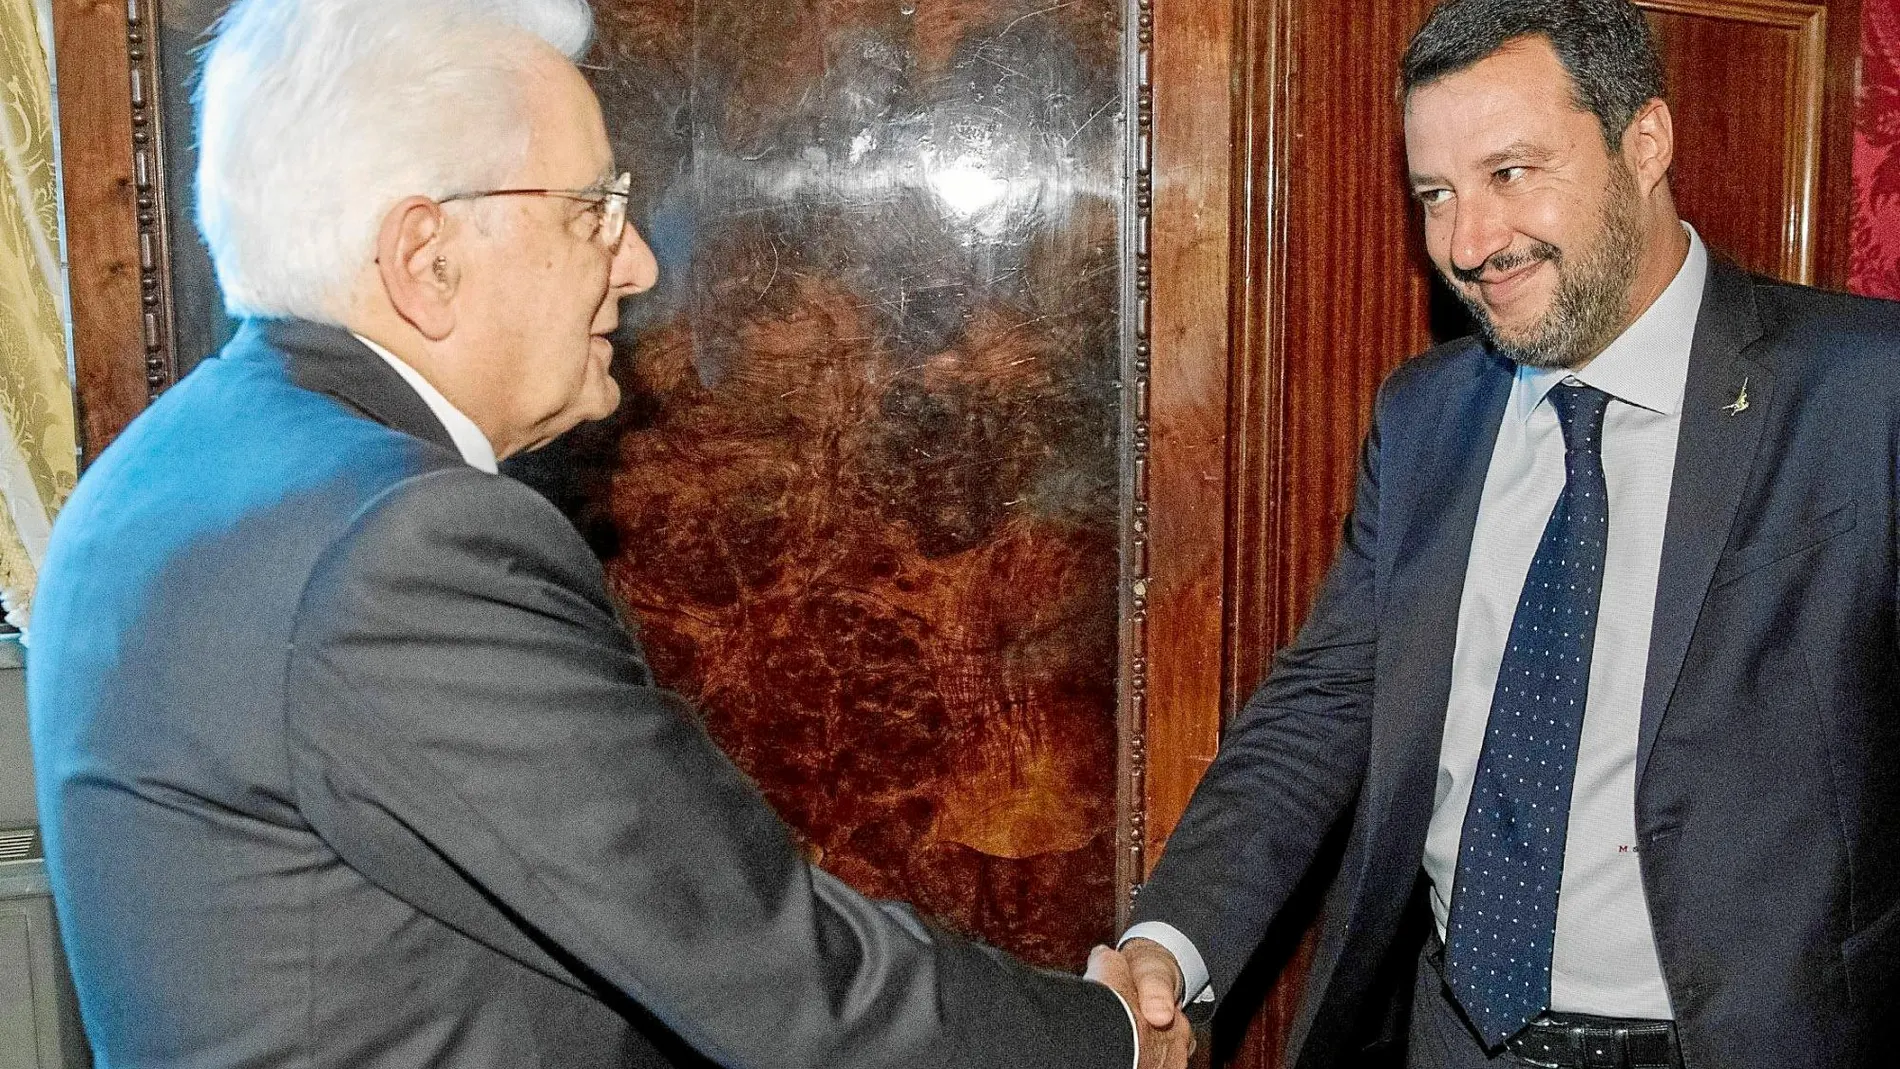 El presidente de la República, Sergio Mattarella, recibió ayer en el Quirinal al líder de la Liga, Matteo Salvini, responsable de la enésima crisis política italiana / Efe